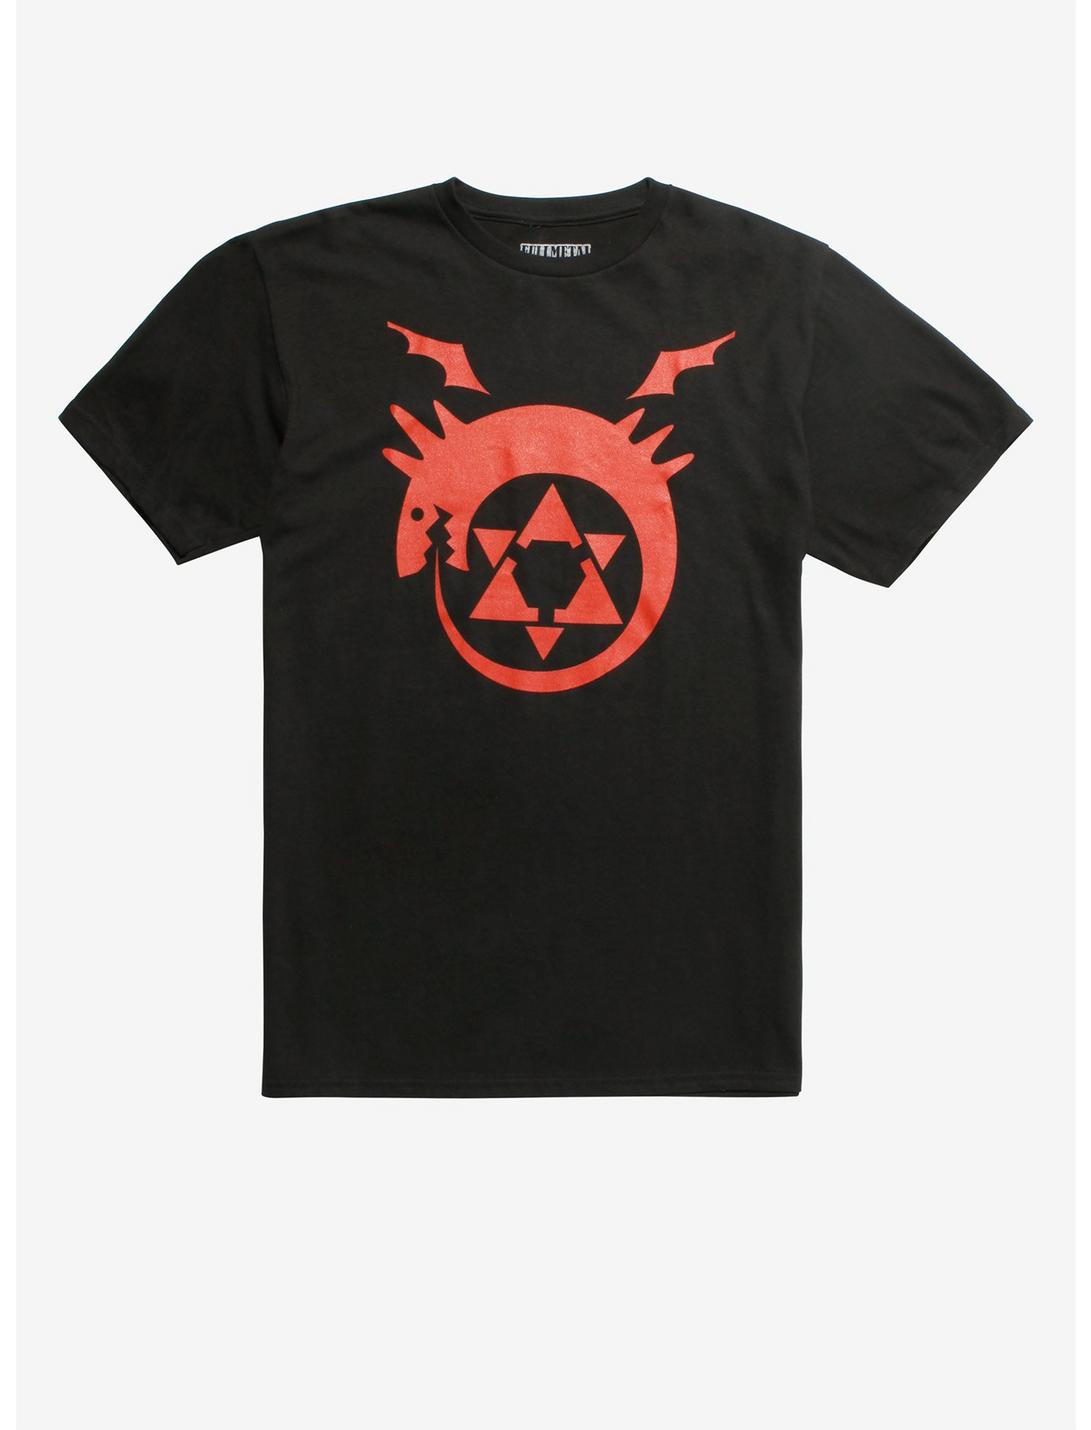 Fullmetal Alchemist Ouroboros T-shirt, RED, hi-res